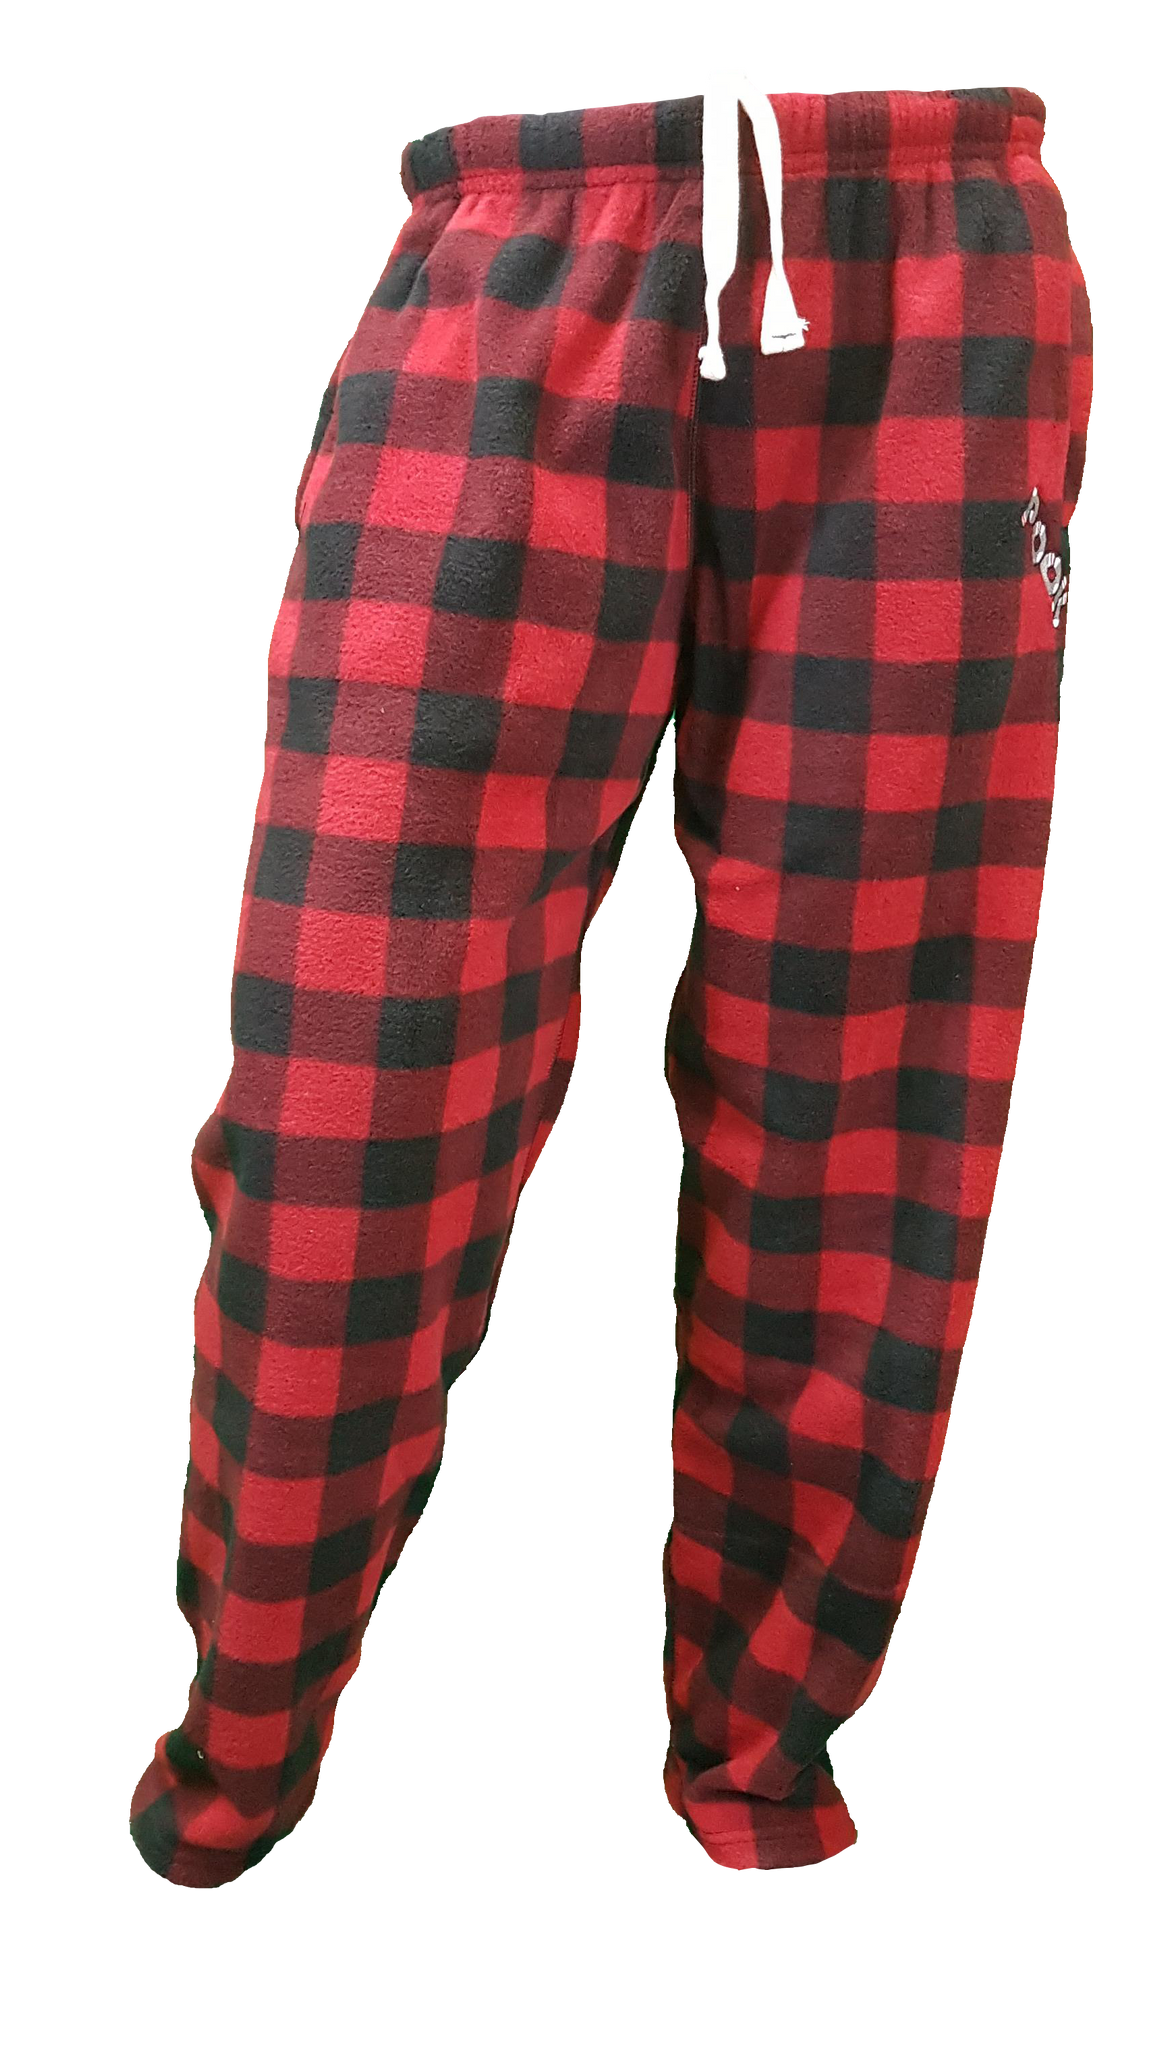 Fleece Pajama Pants (Red Plaid)  Join the POOK Lifestyle! – Pook USA